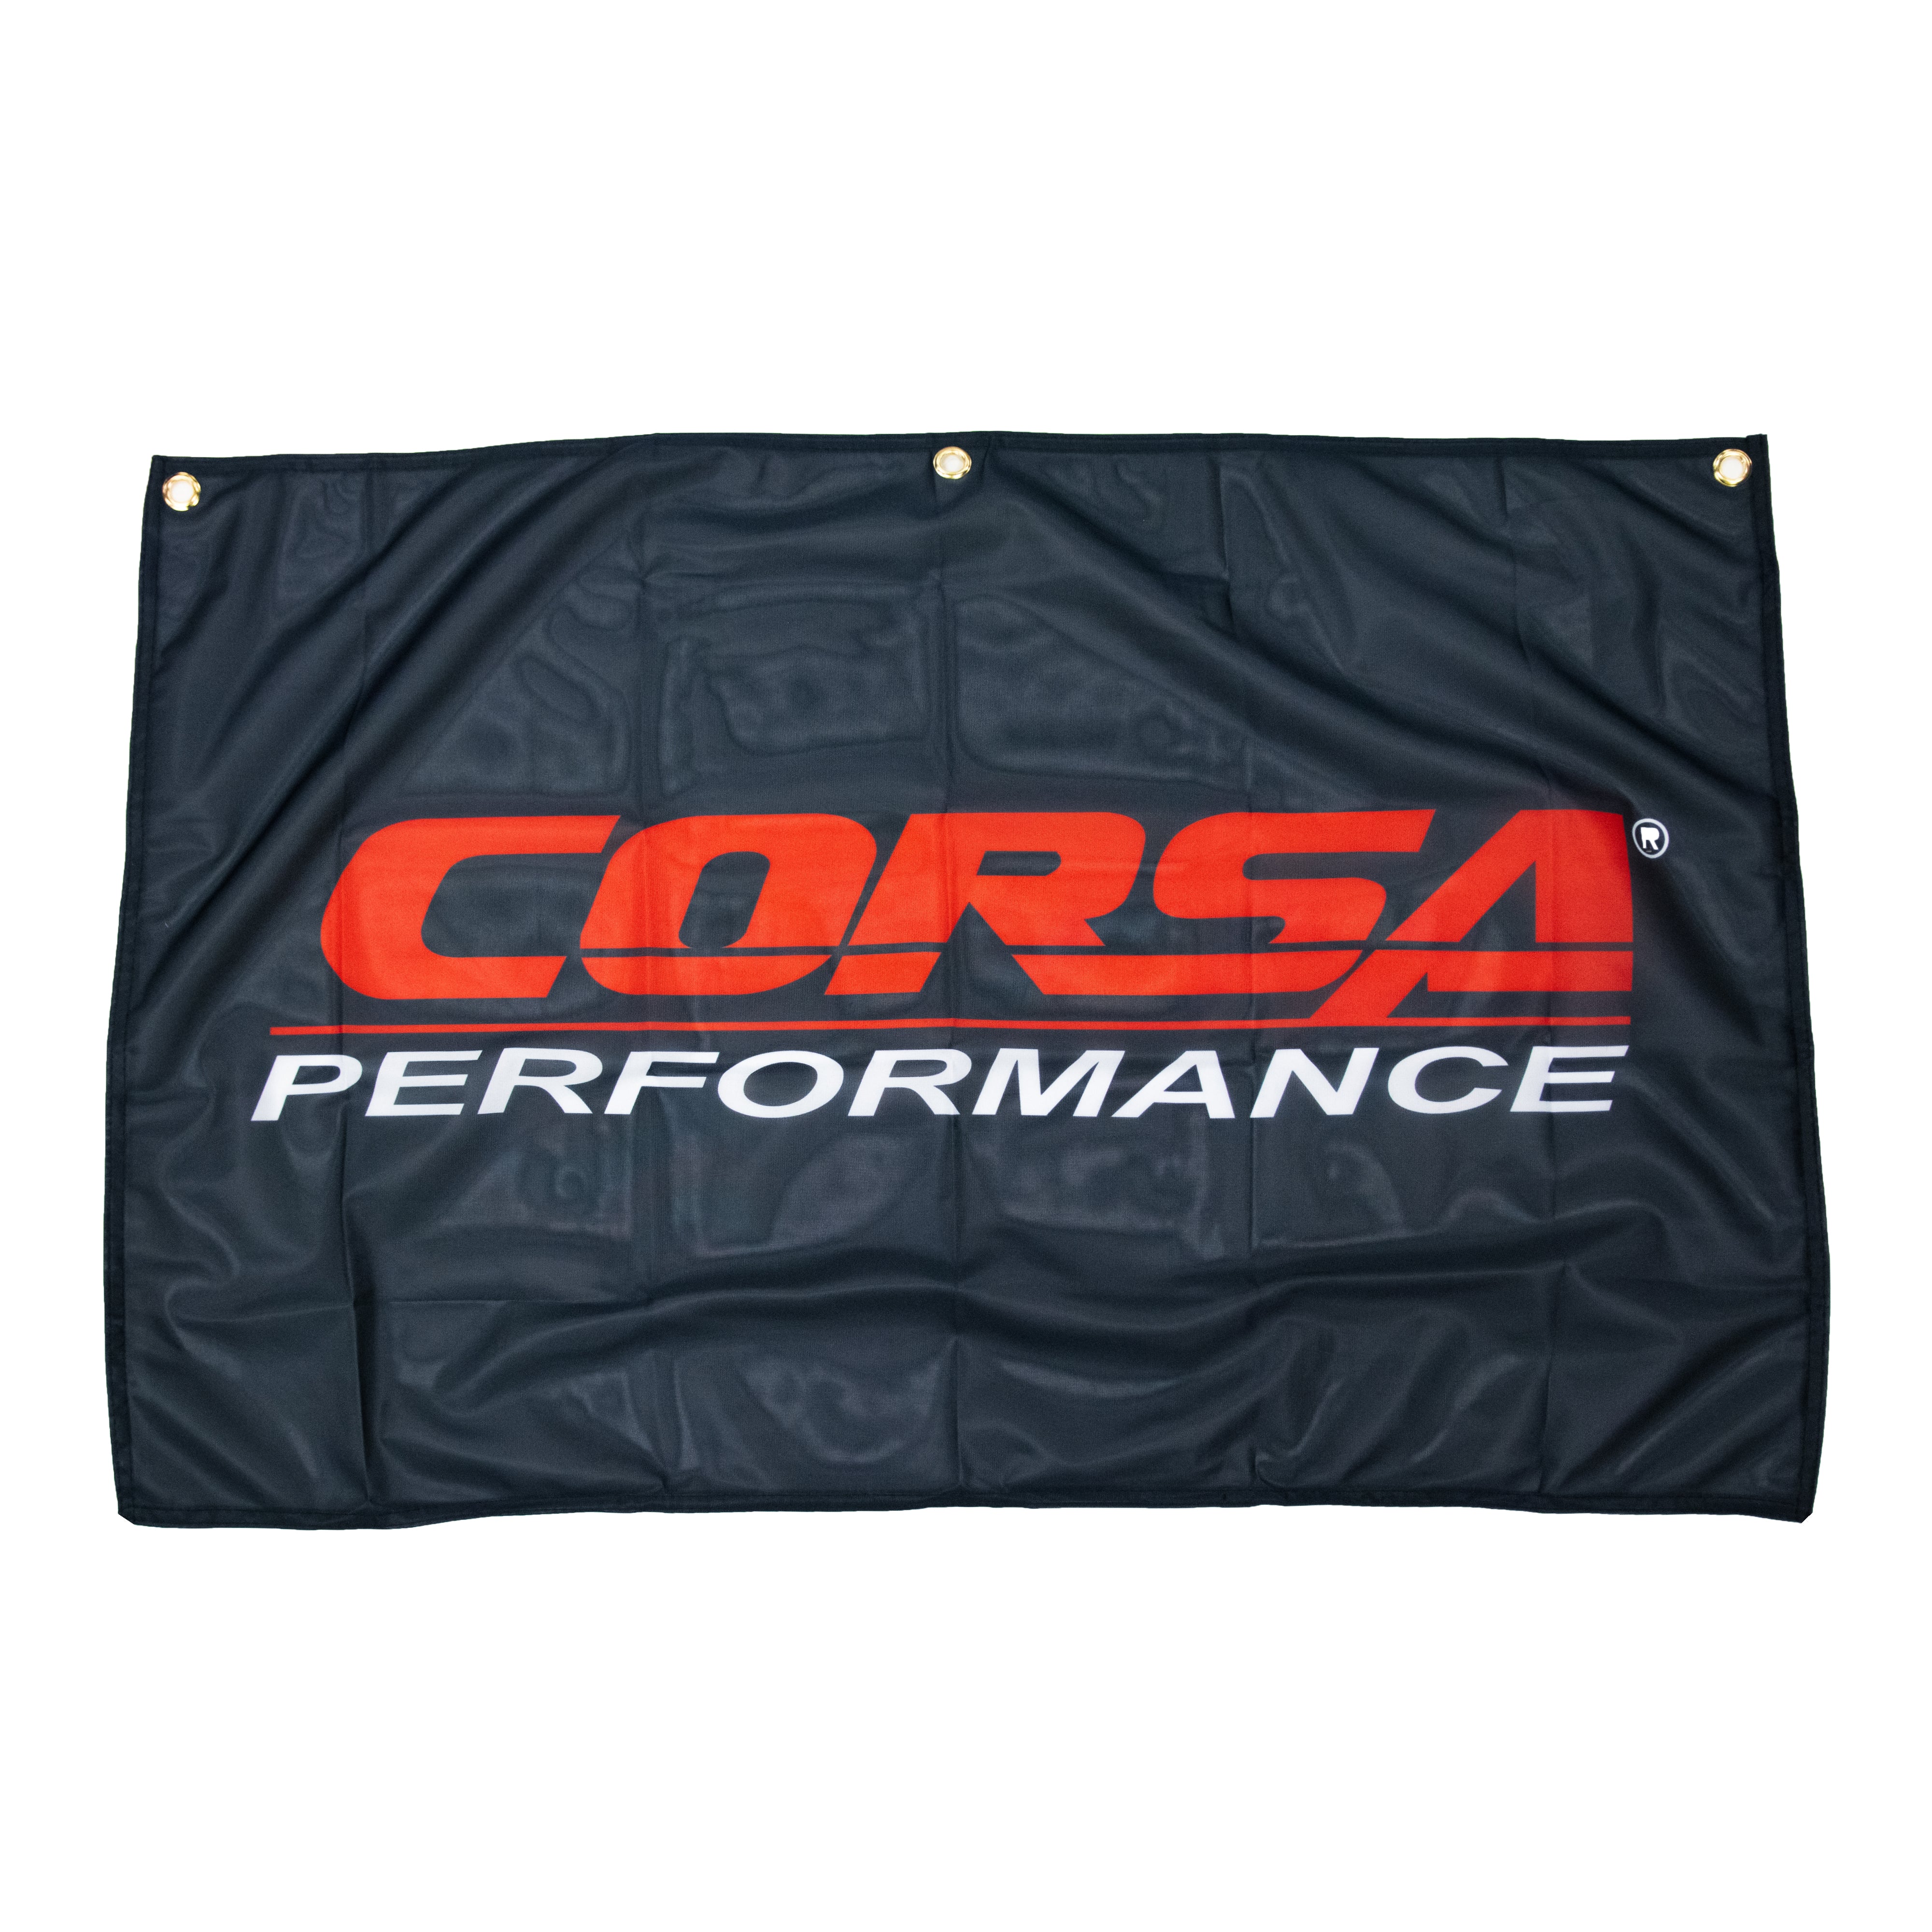 Fabric / CORSA Banner | Outdoor or Garage